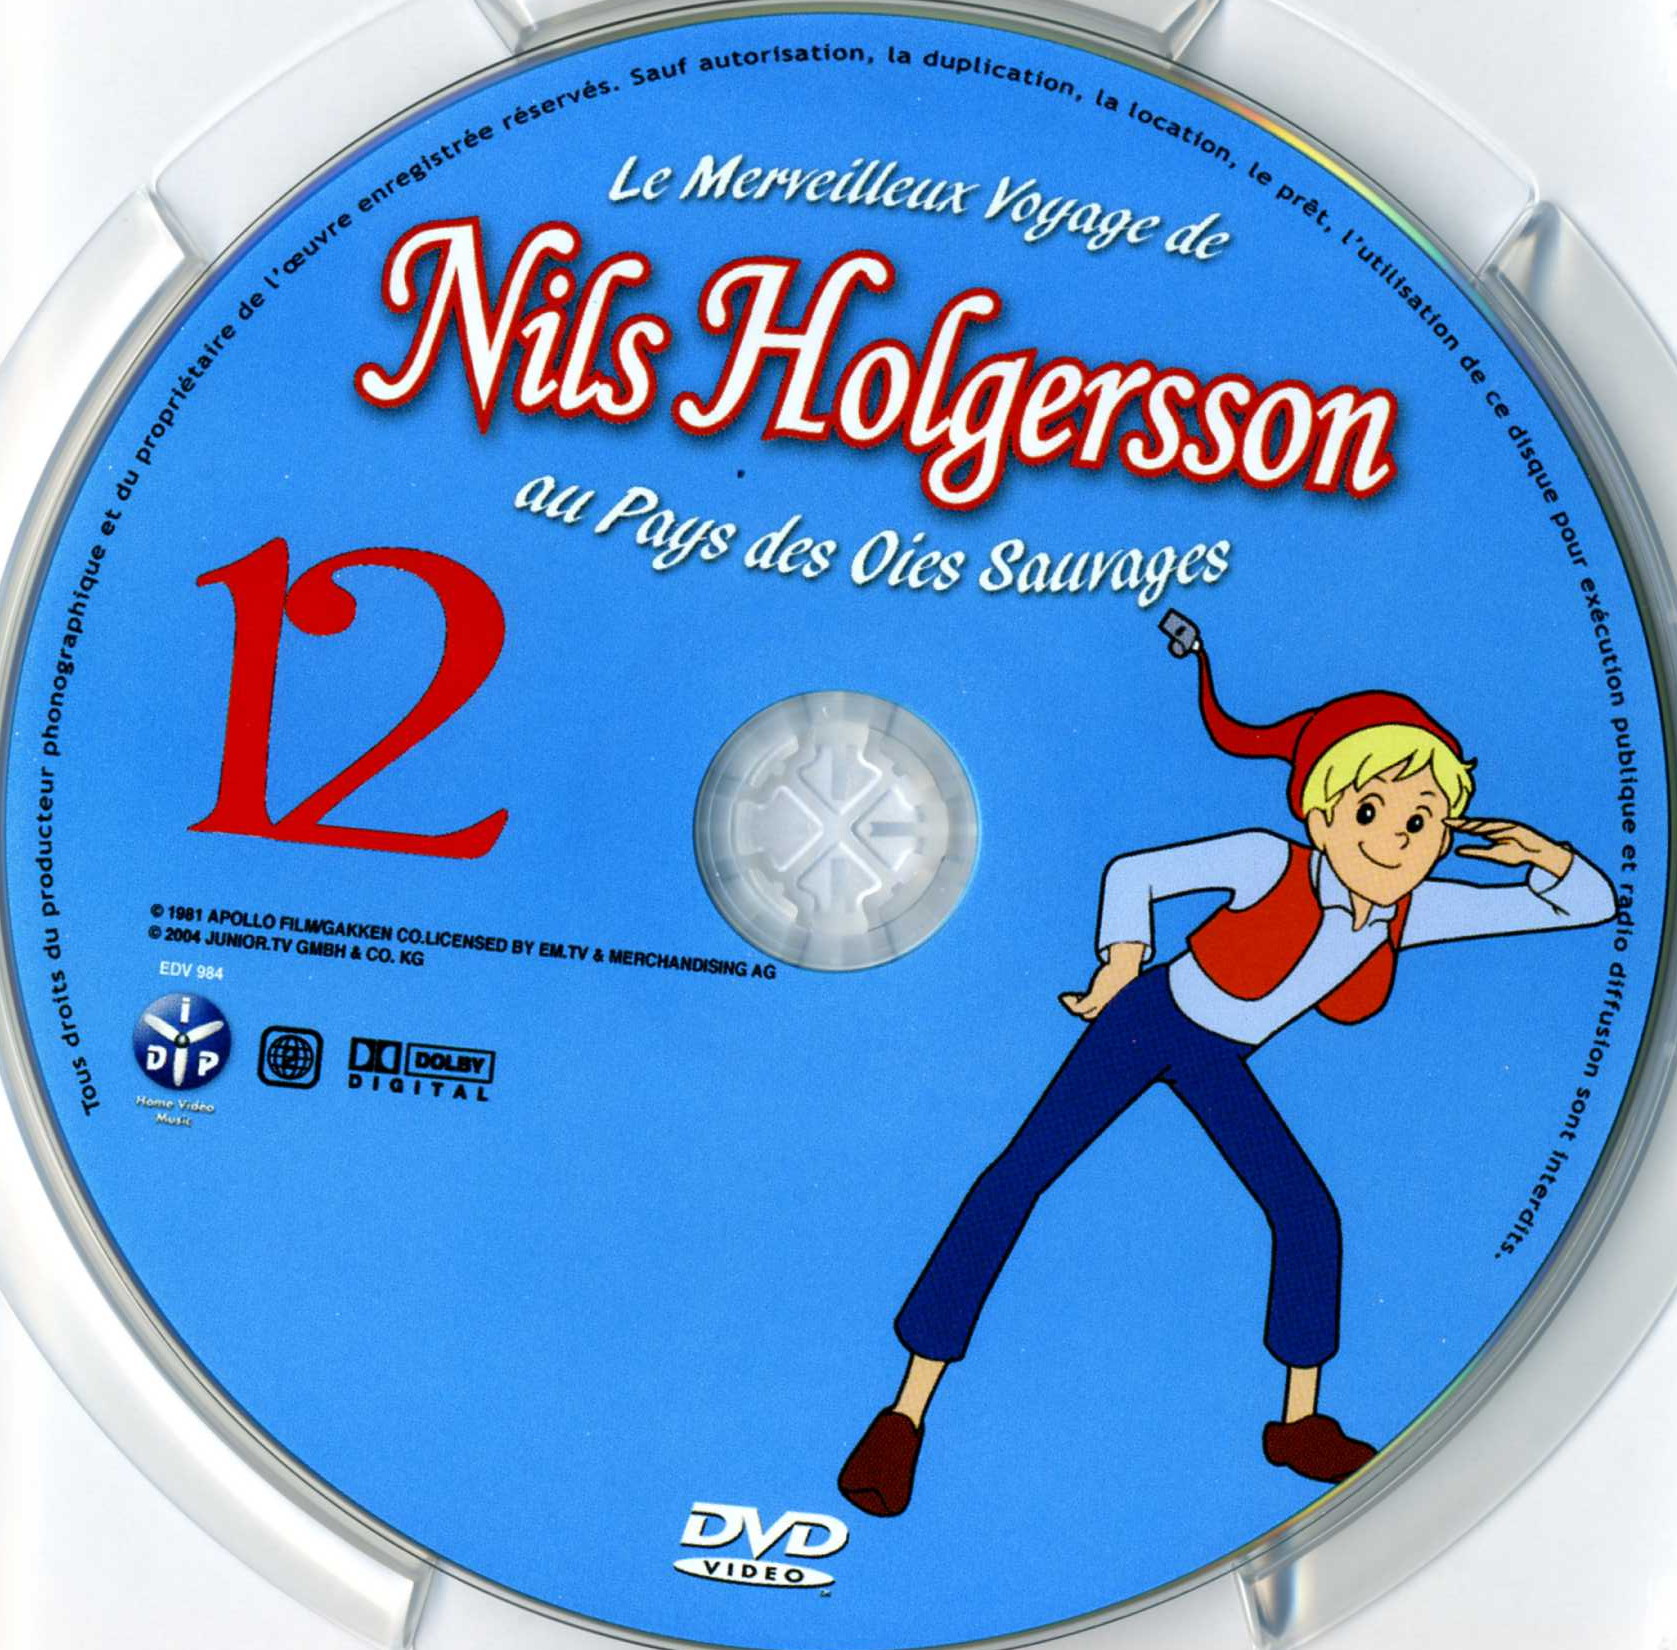 Nils Holgersson vol 12